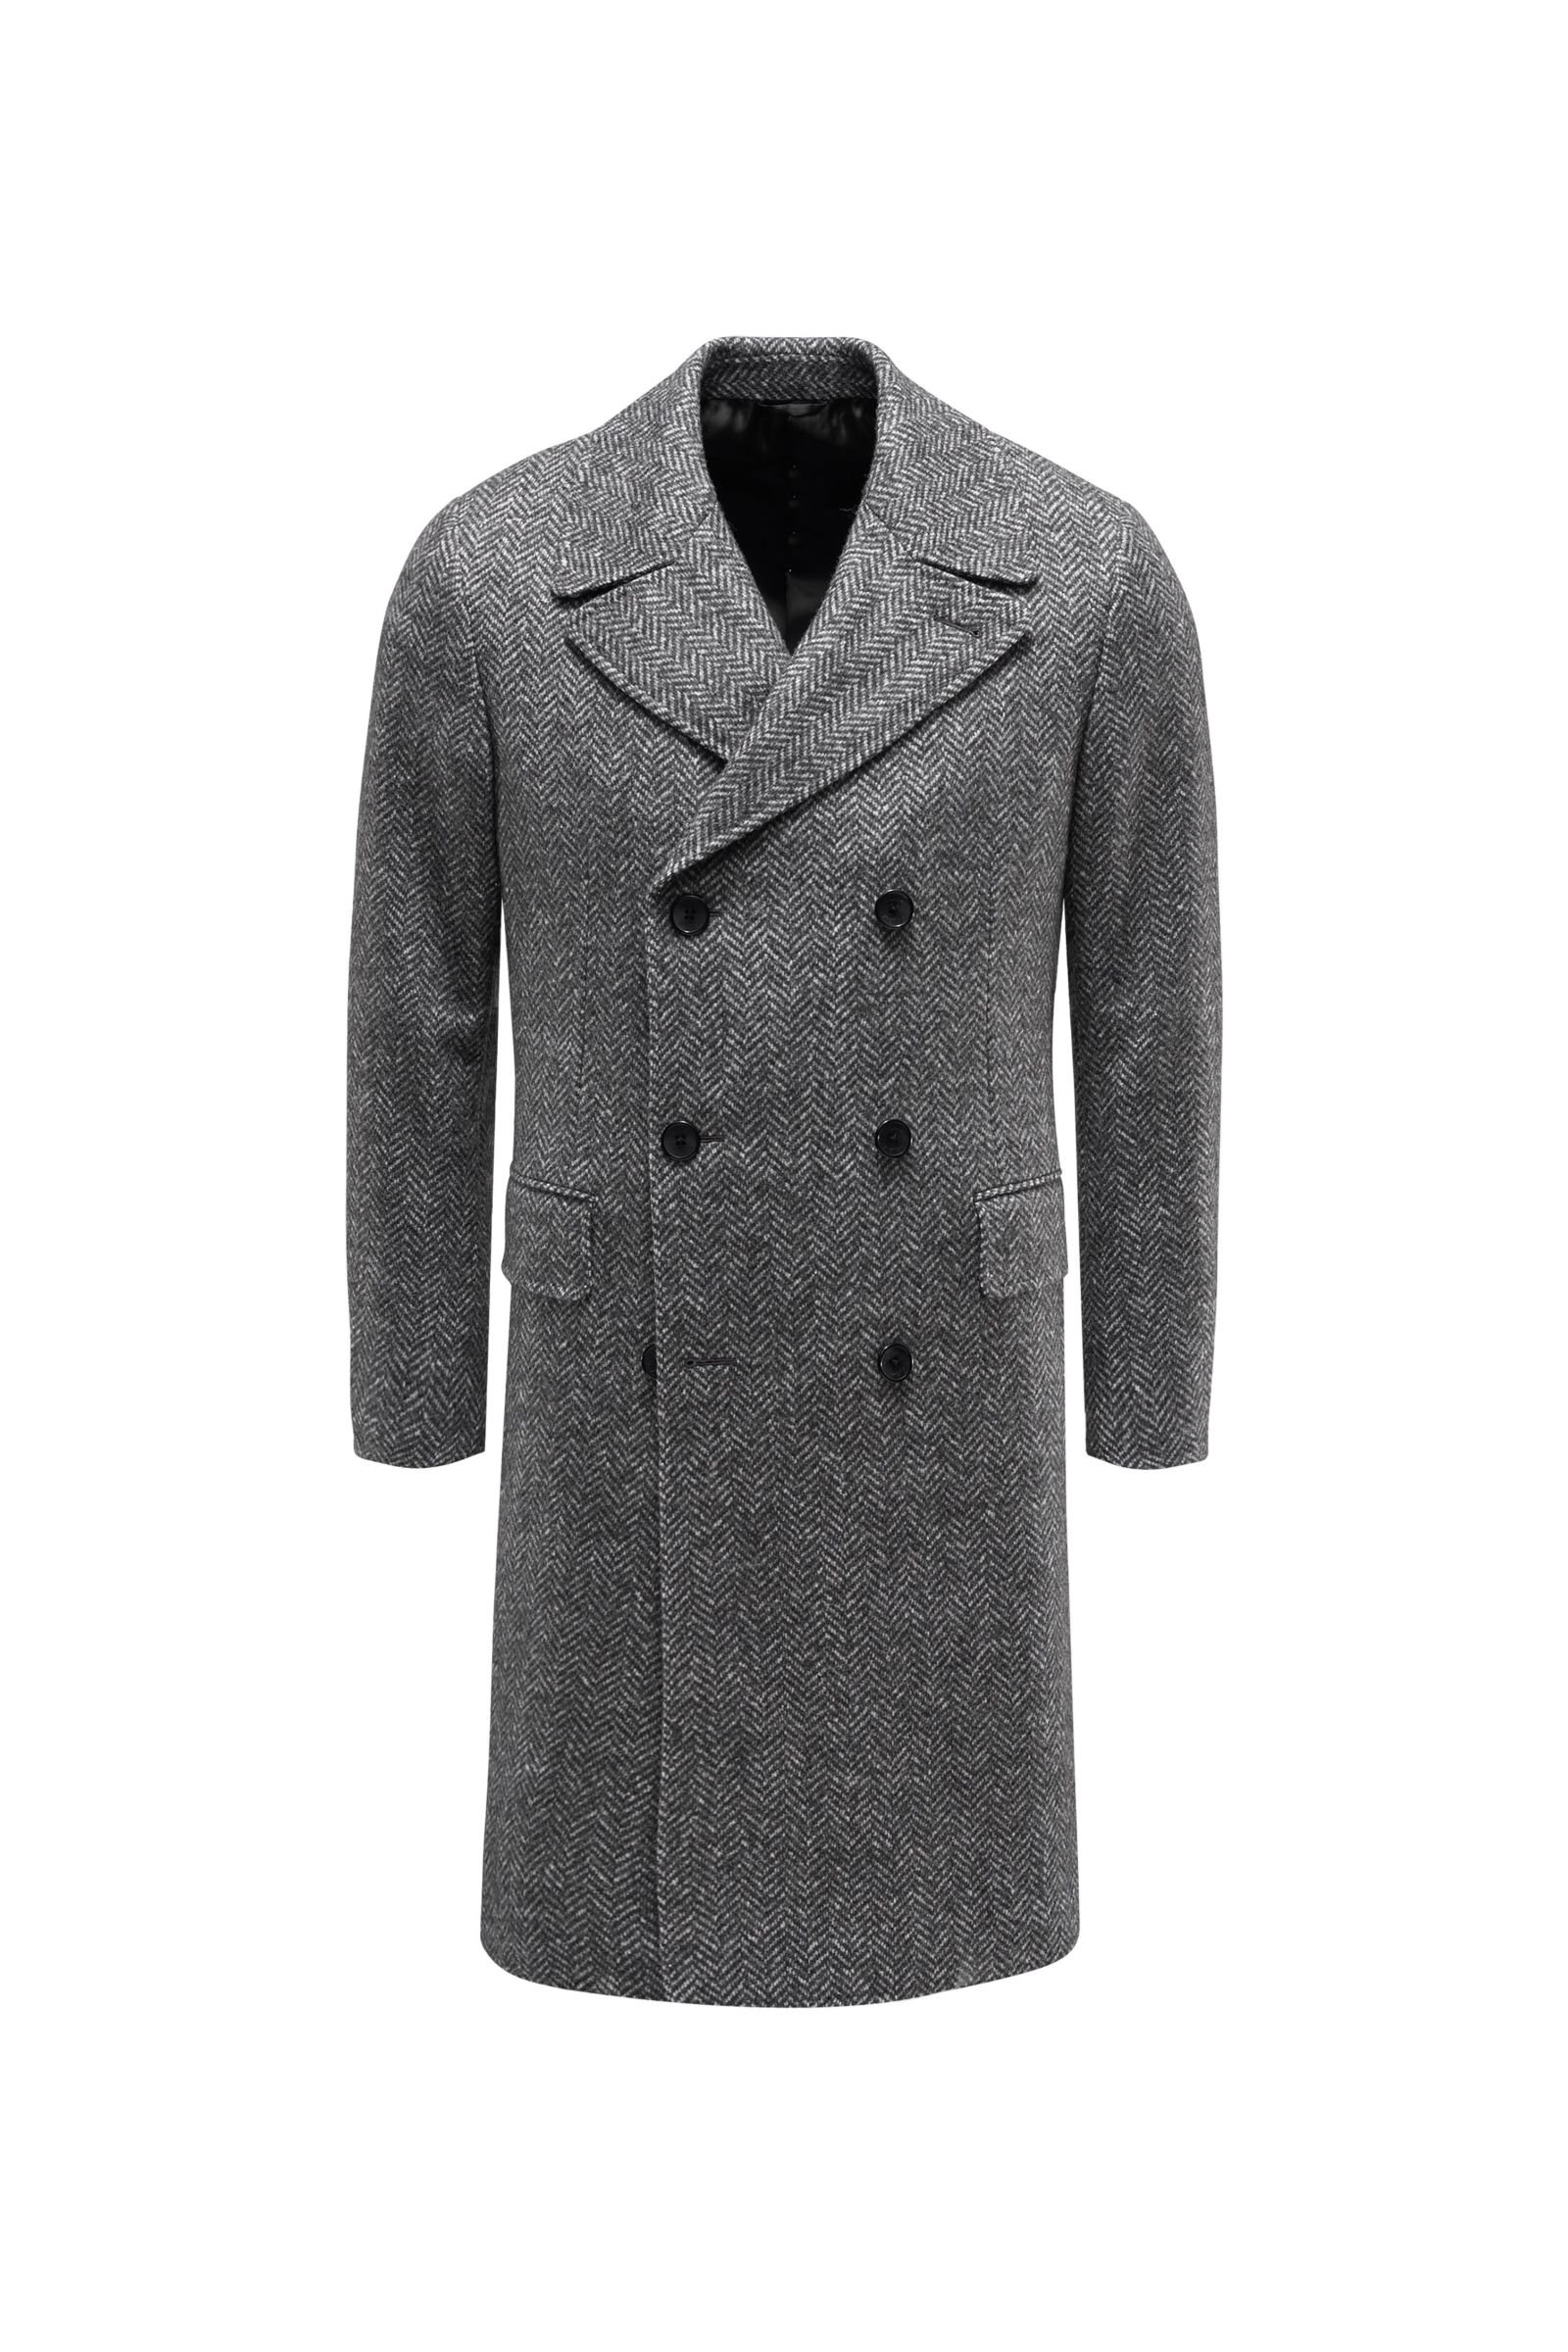 Coat grey/white patterned